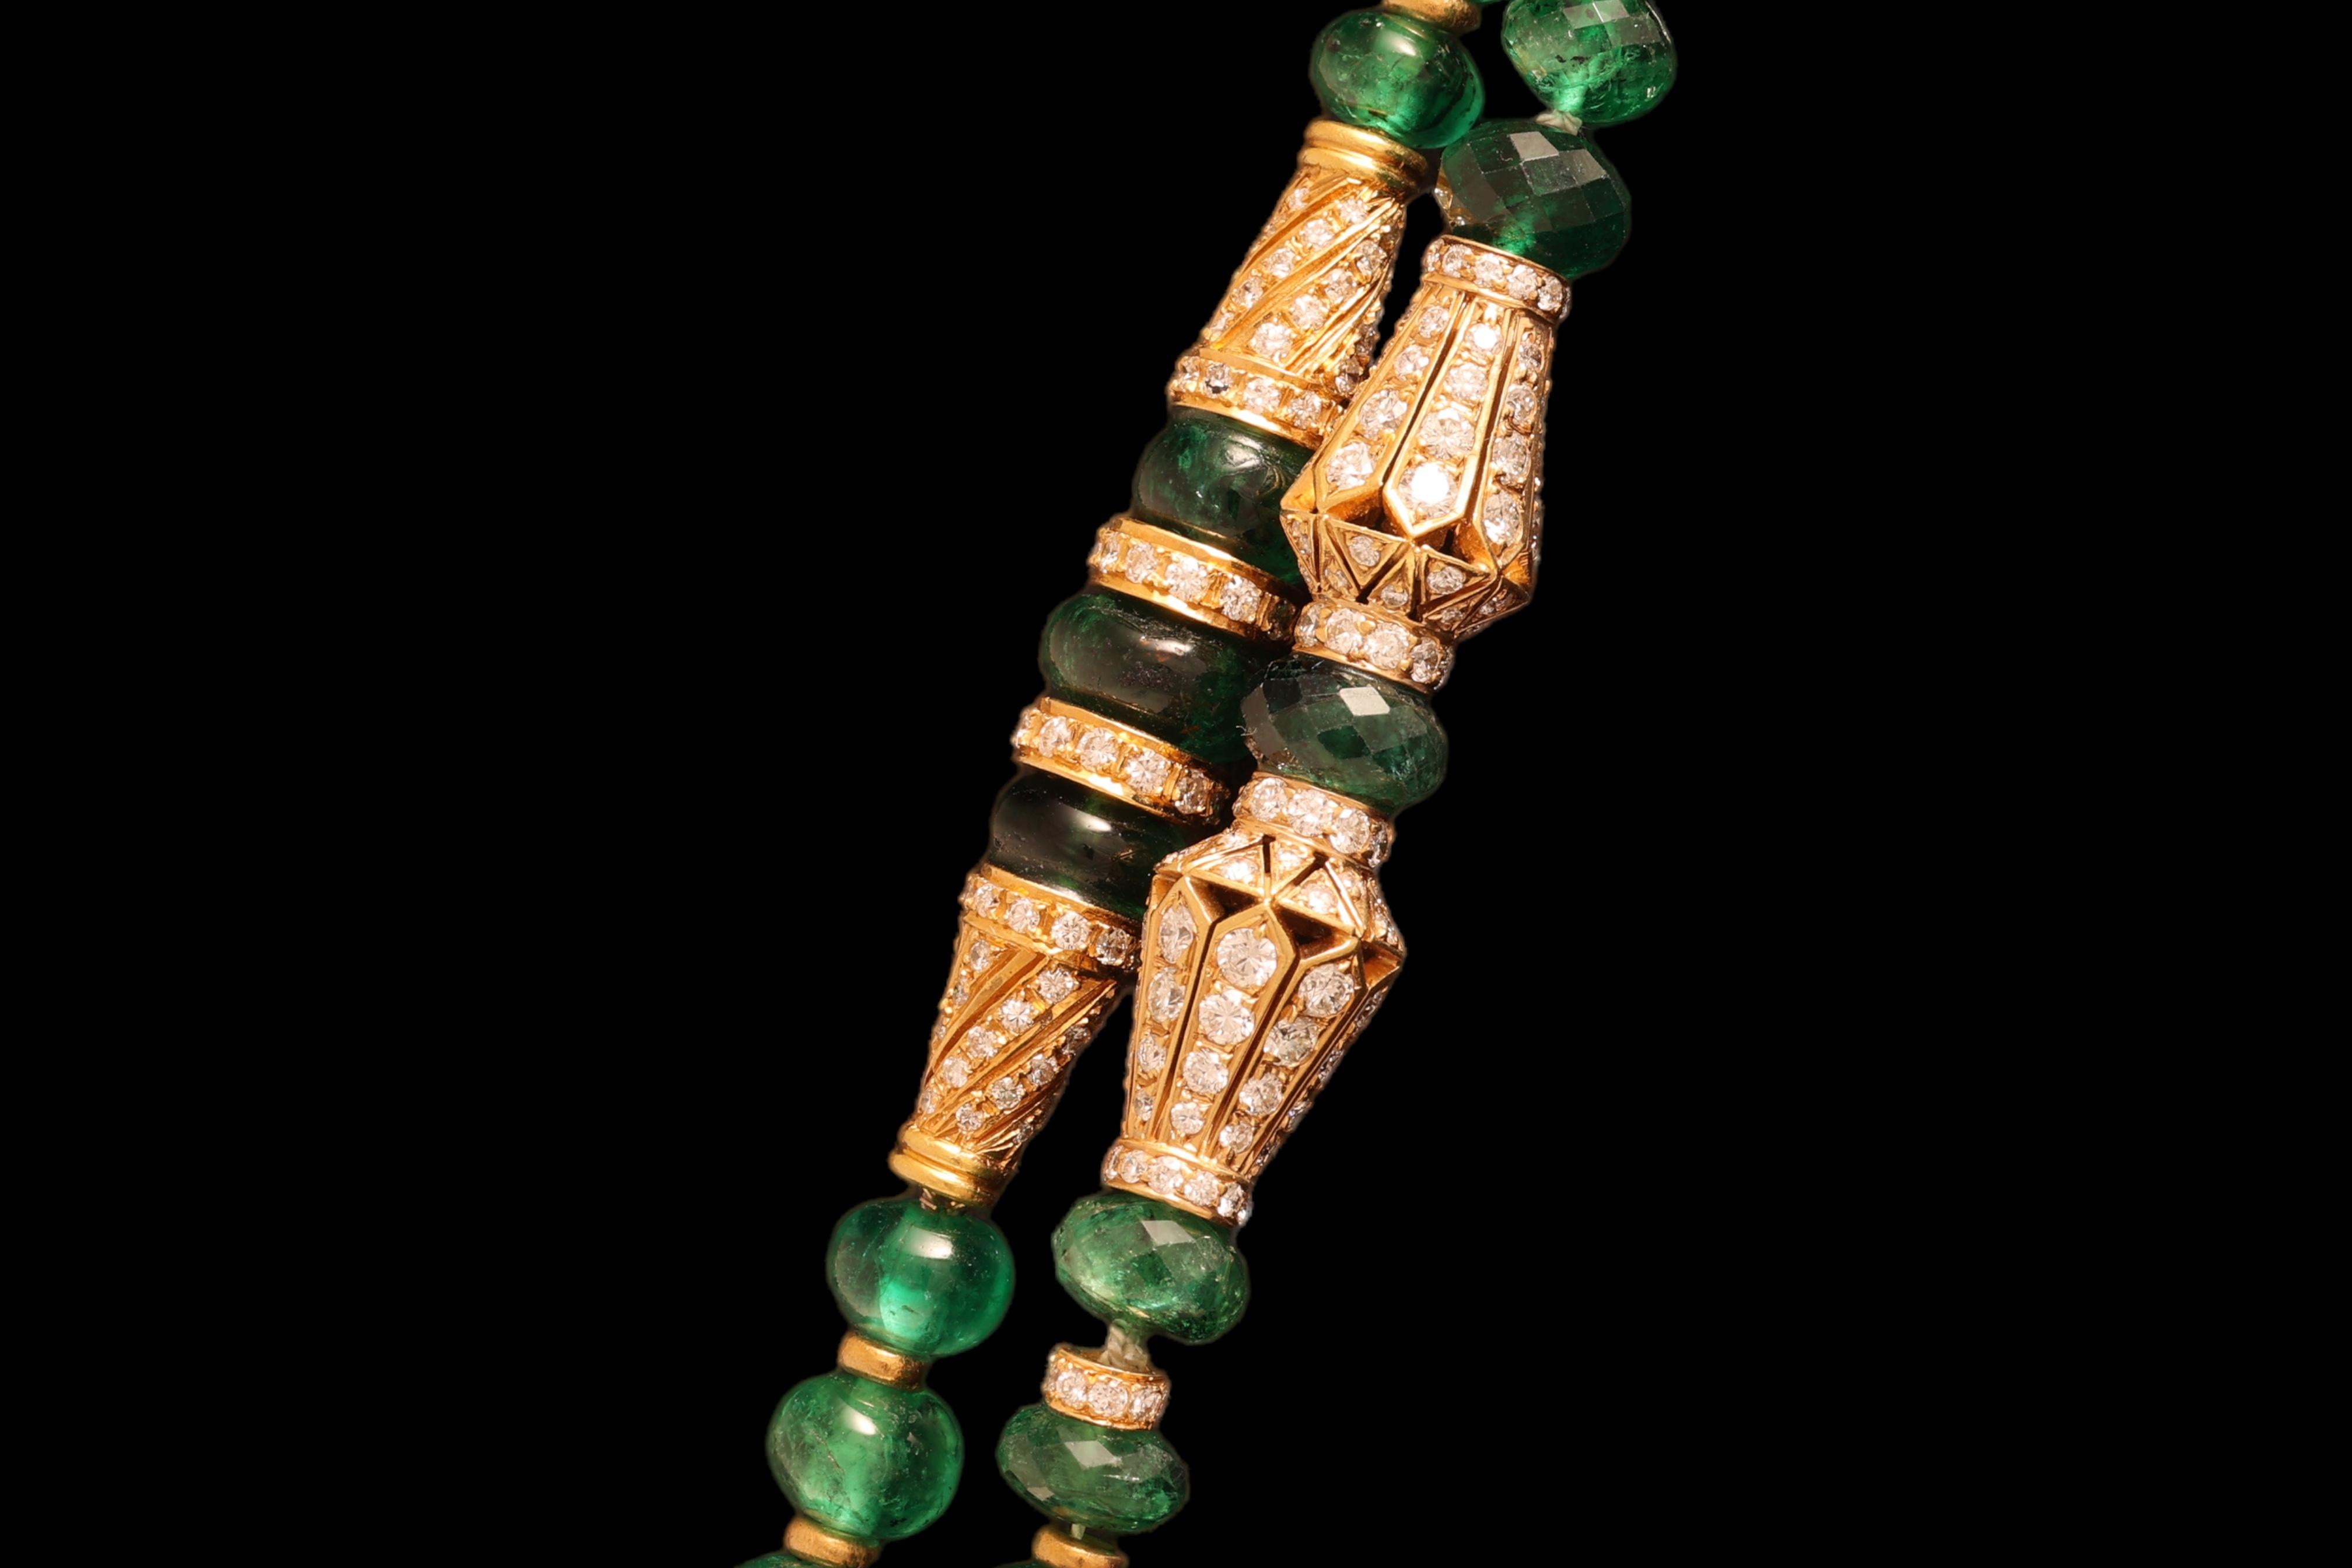 Adler Genèva 18kt Gold Necklaces 480ct Faceted Bead Emeralds CGL Certified For Sale 5